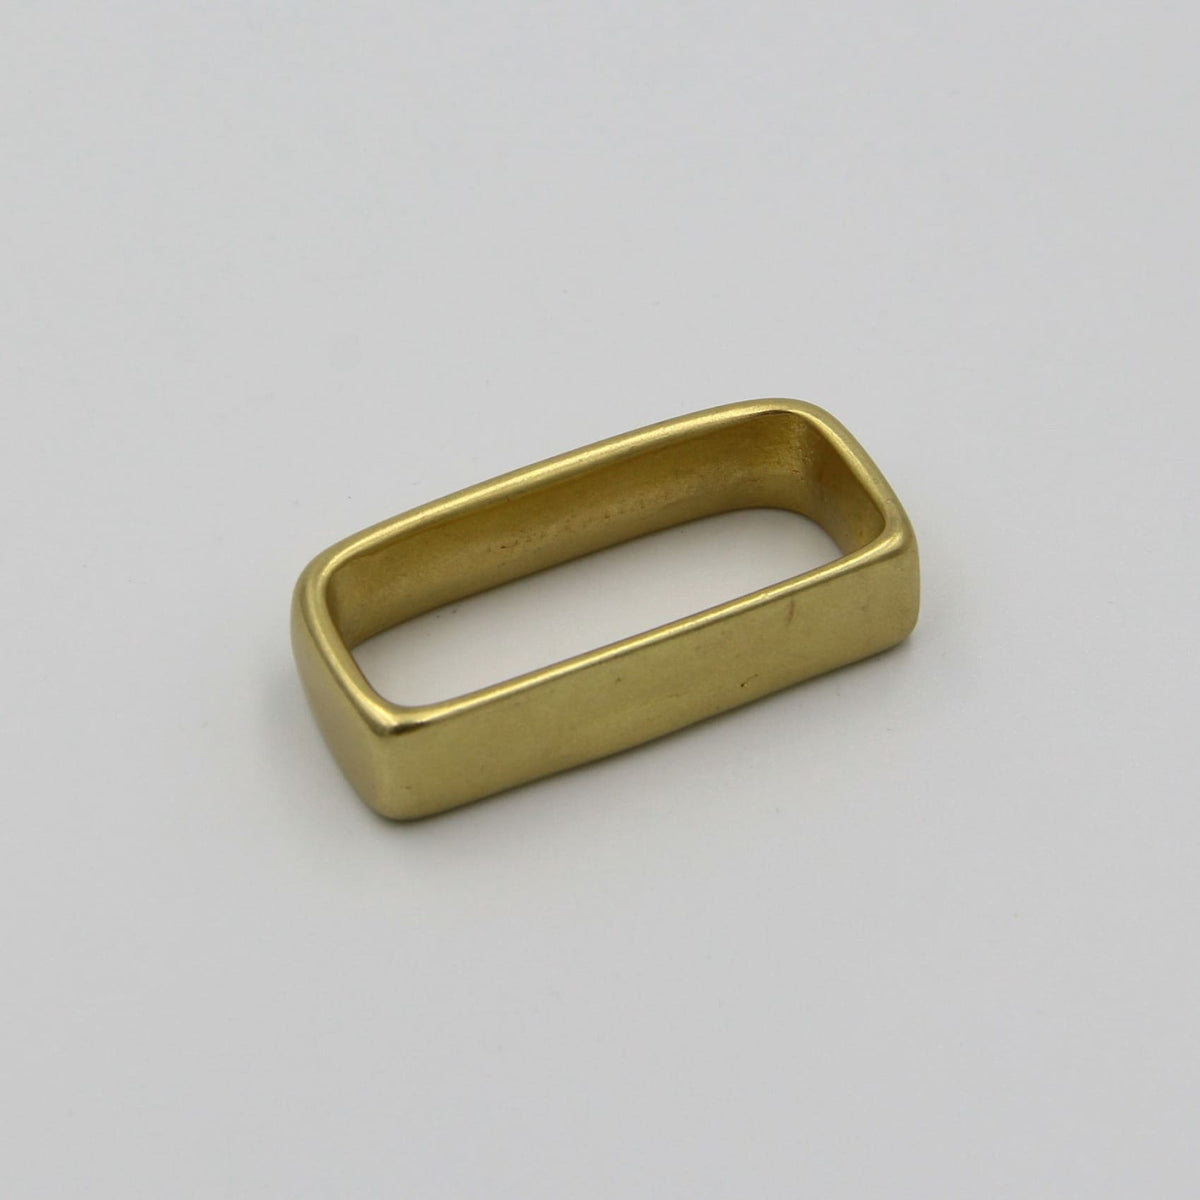  DJCAIZYY Belt Loop Keeper Brass 1 1/2 (38mm-40mm) Belt Loop  Men's Belt Buckle Accessories : Clothing, Shoes & Jewelry